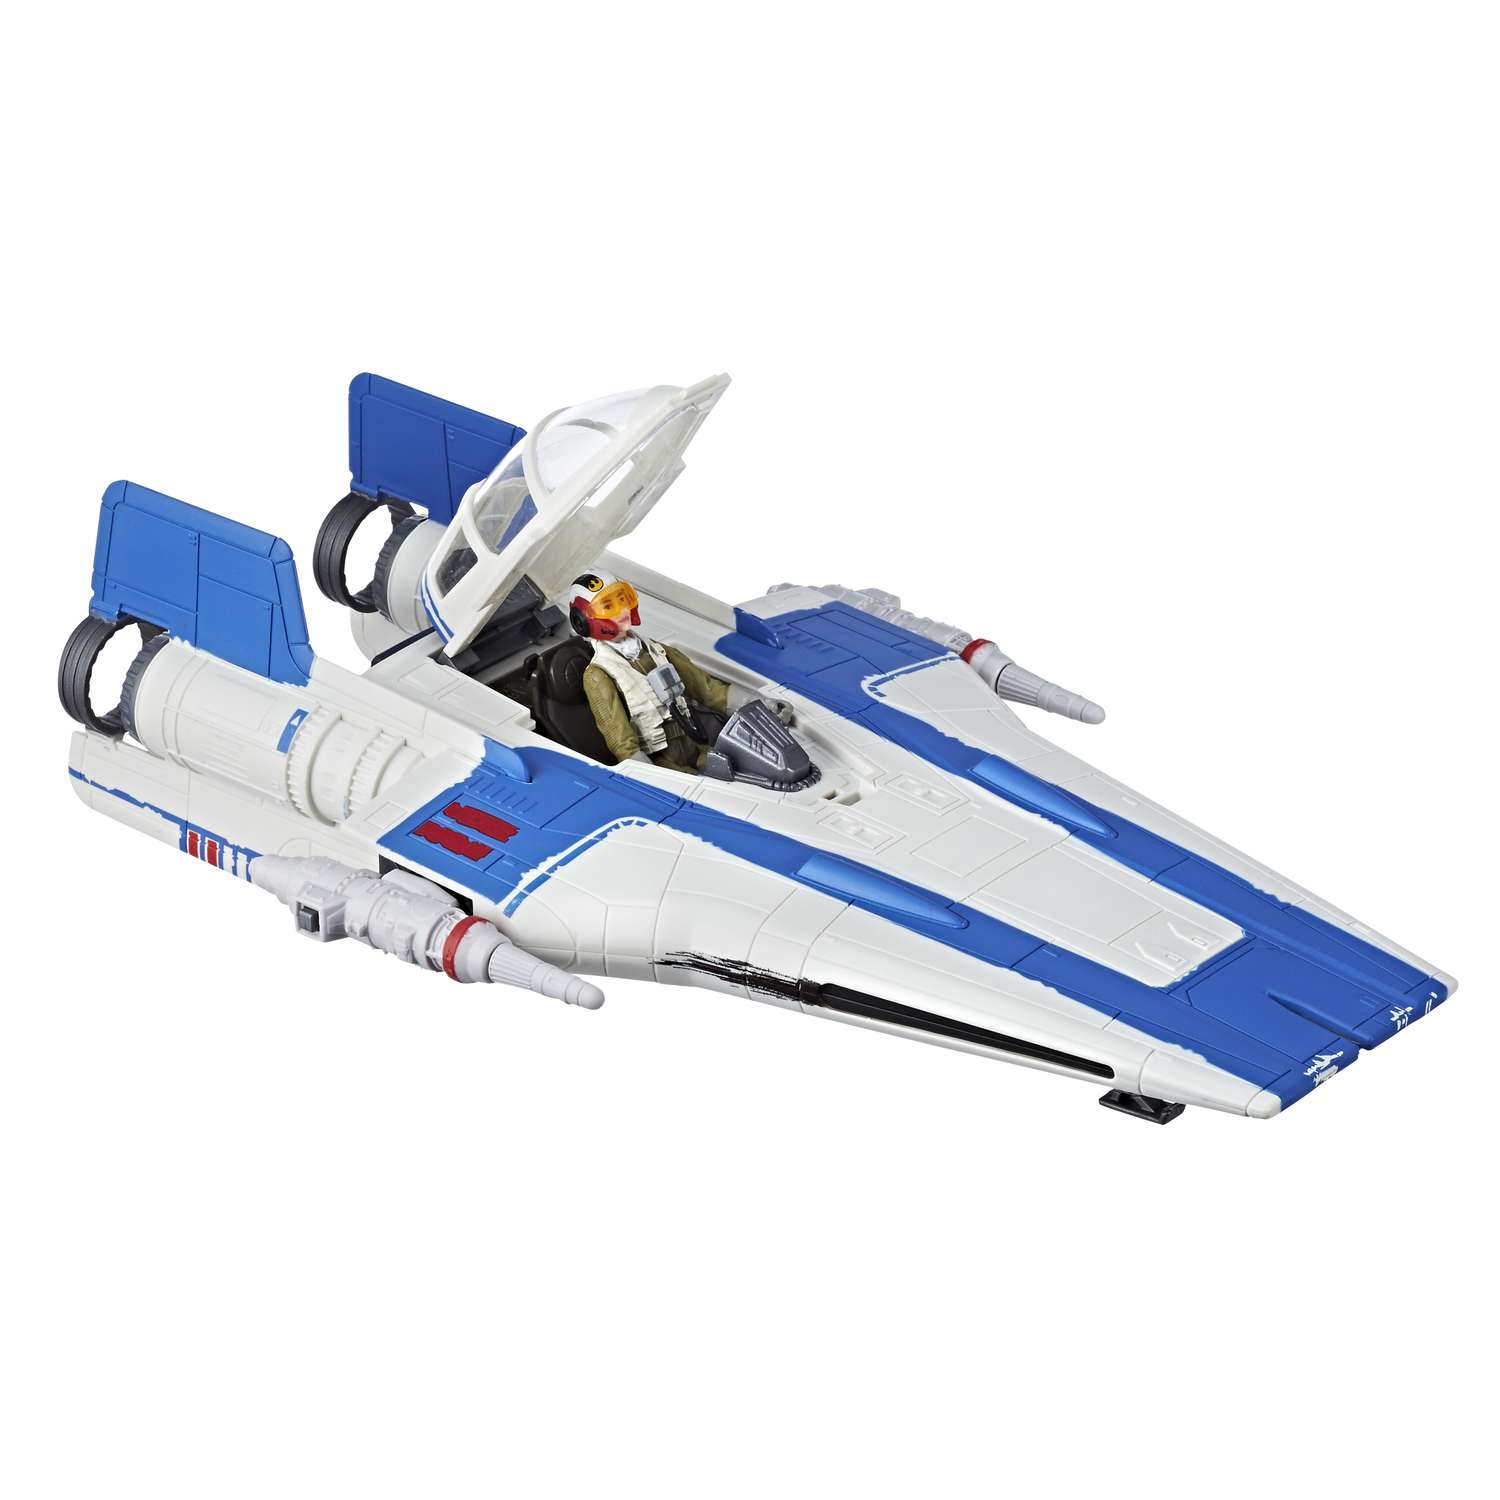 Игрушка Star Wars (SW) Транспорт Звездный истребитель a wing E1264EU4 E0326EU4 - фото 5